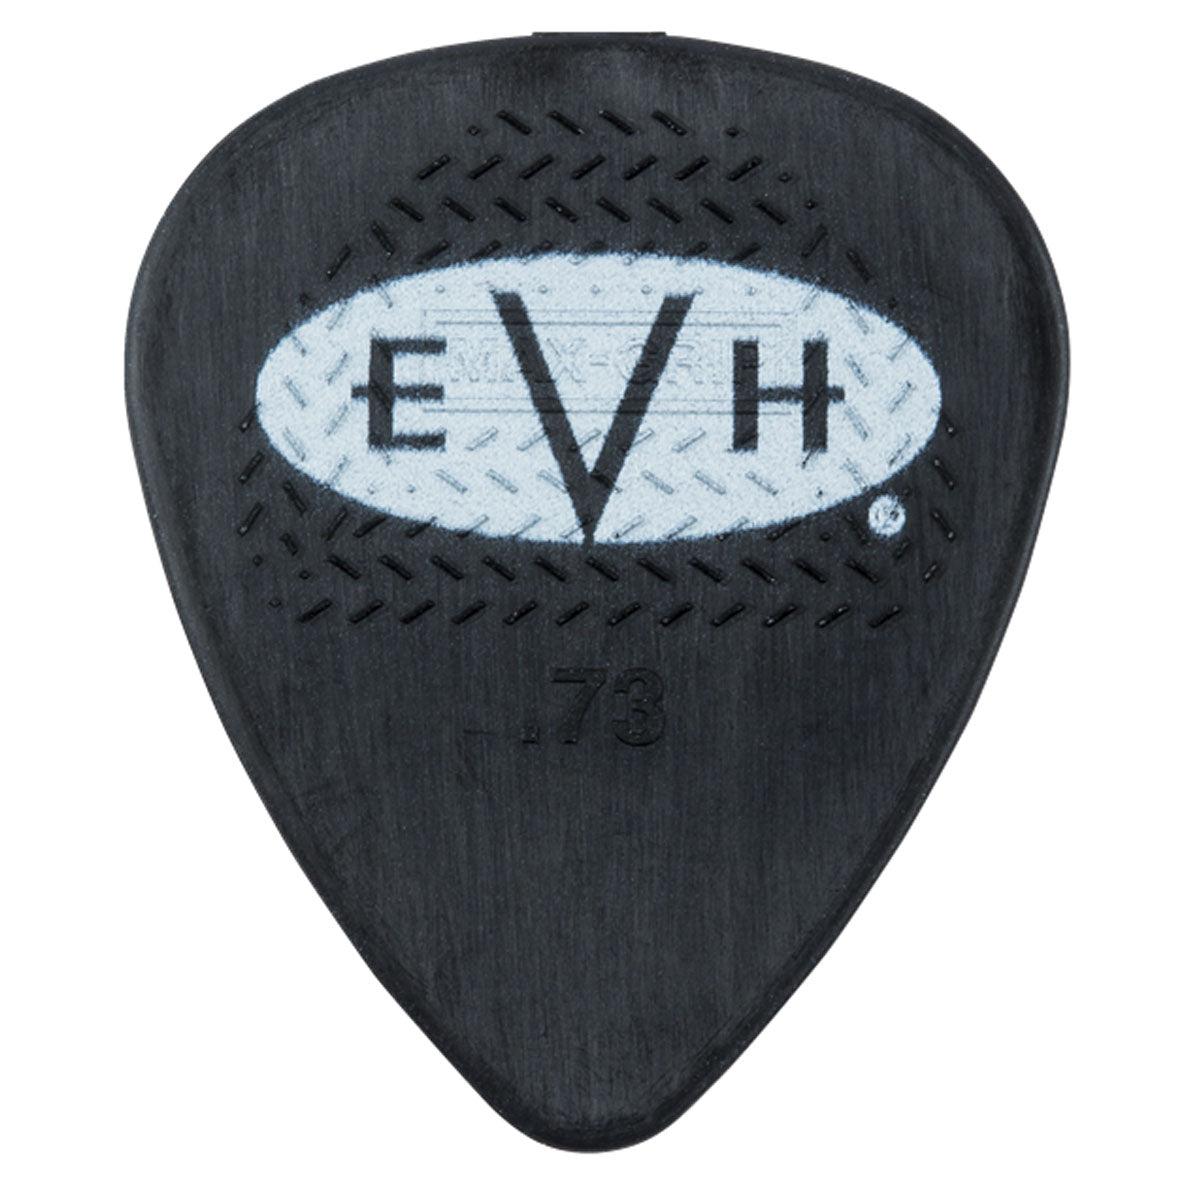 EVH Signature Picks, Black/White, .73mm, (6 Pack) - 0221351403